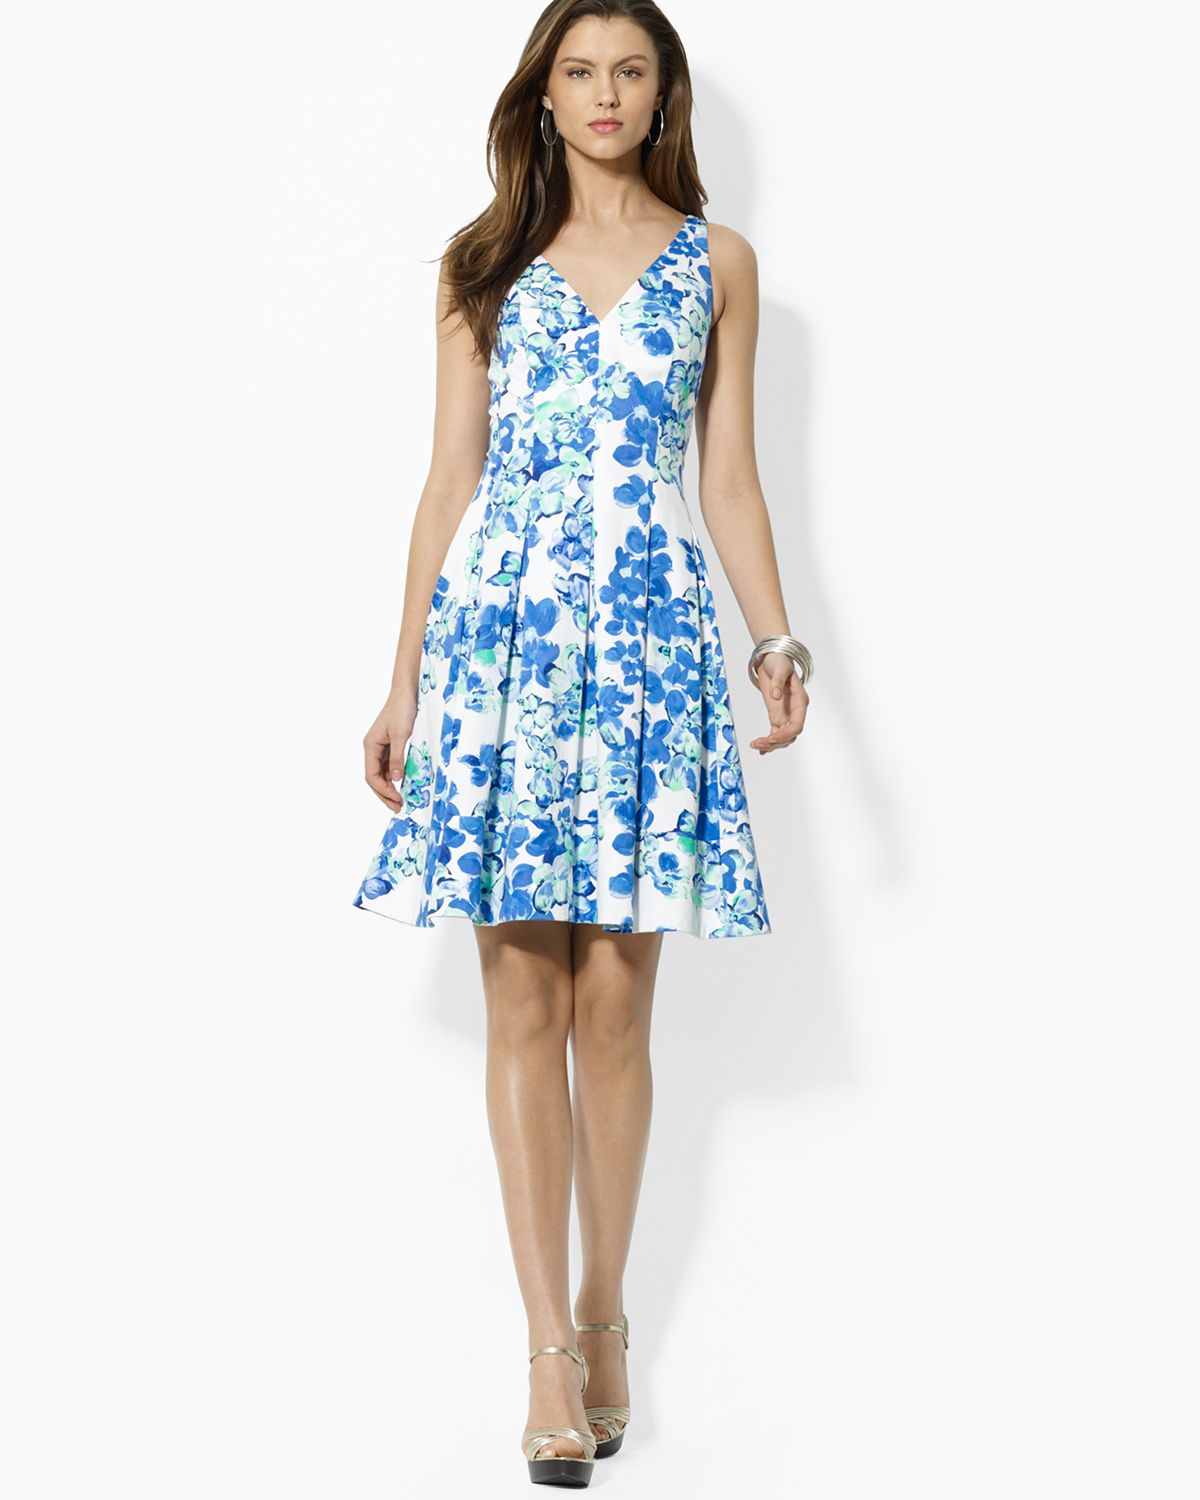 Lyst - Ralph Lauren Lauren Dress Refreshing Floral Print in Blue